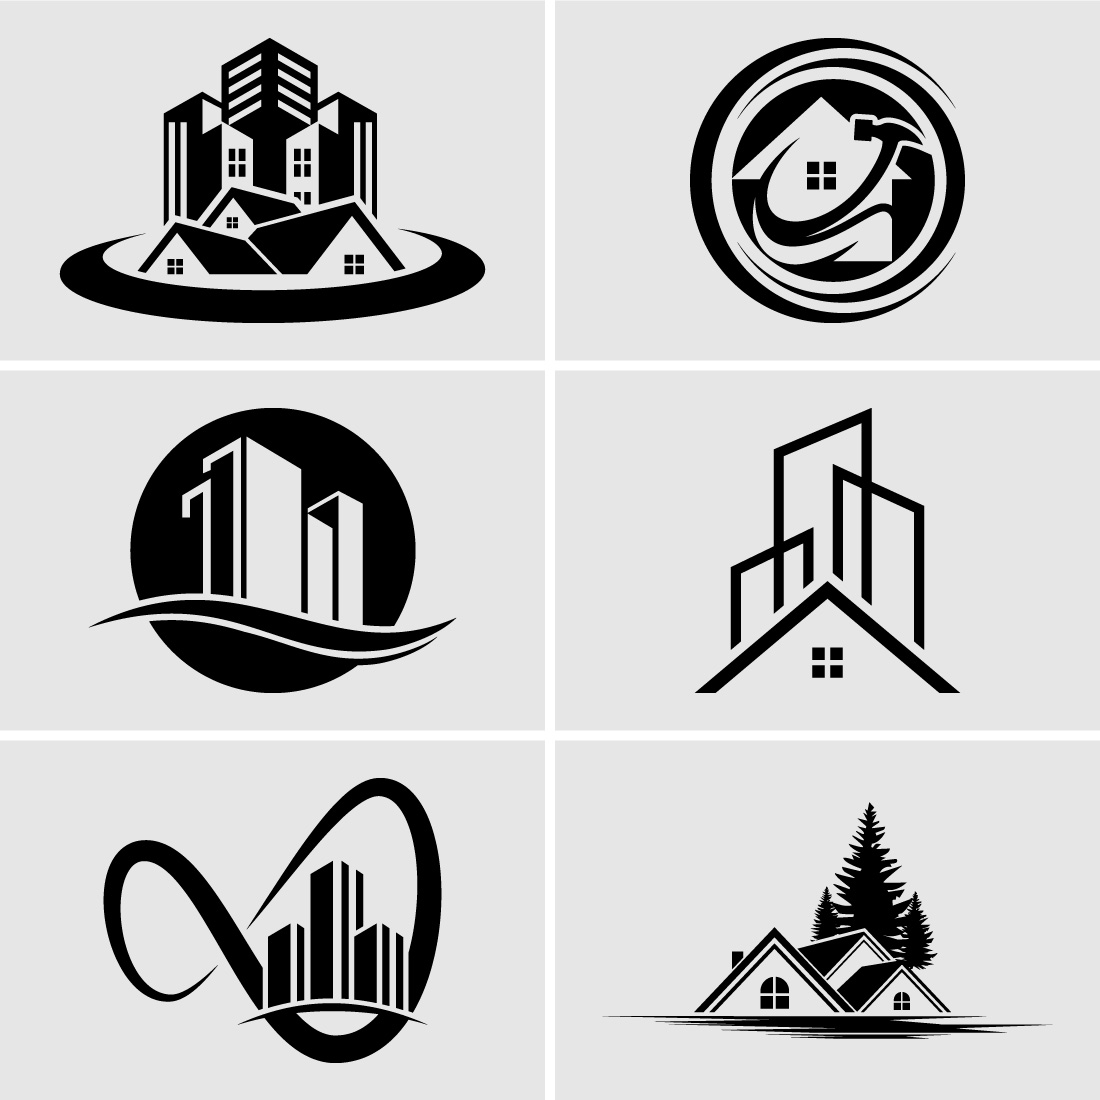 Real estate logo, House logo, Home logo sign symbol preview image.